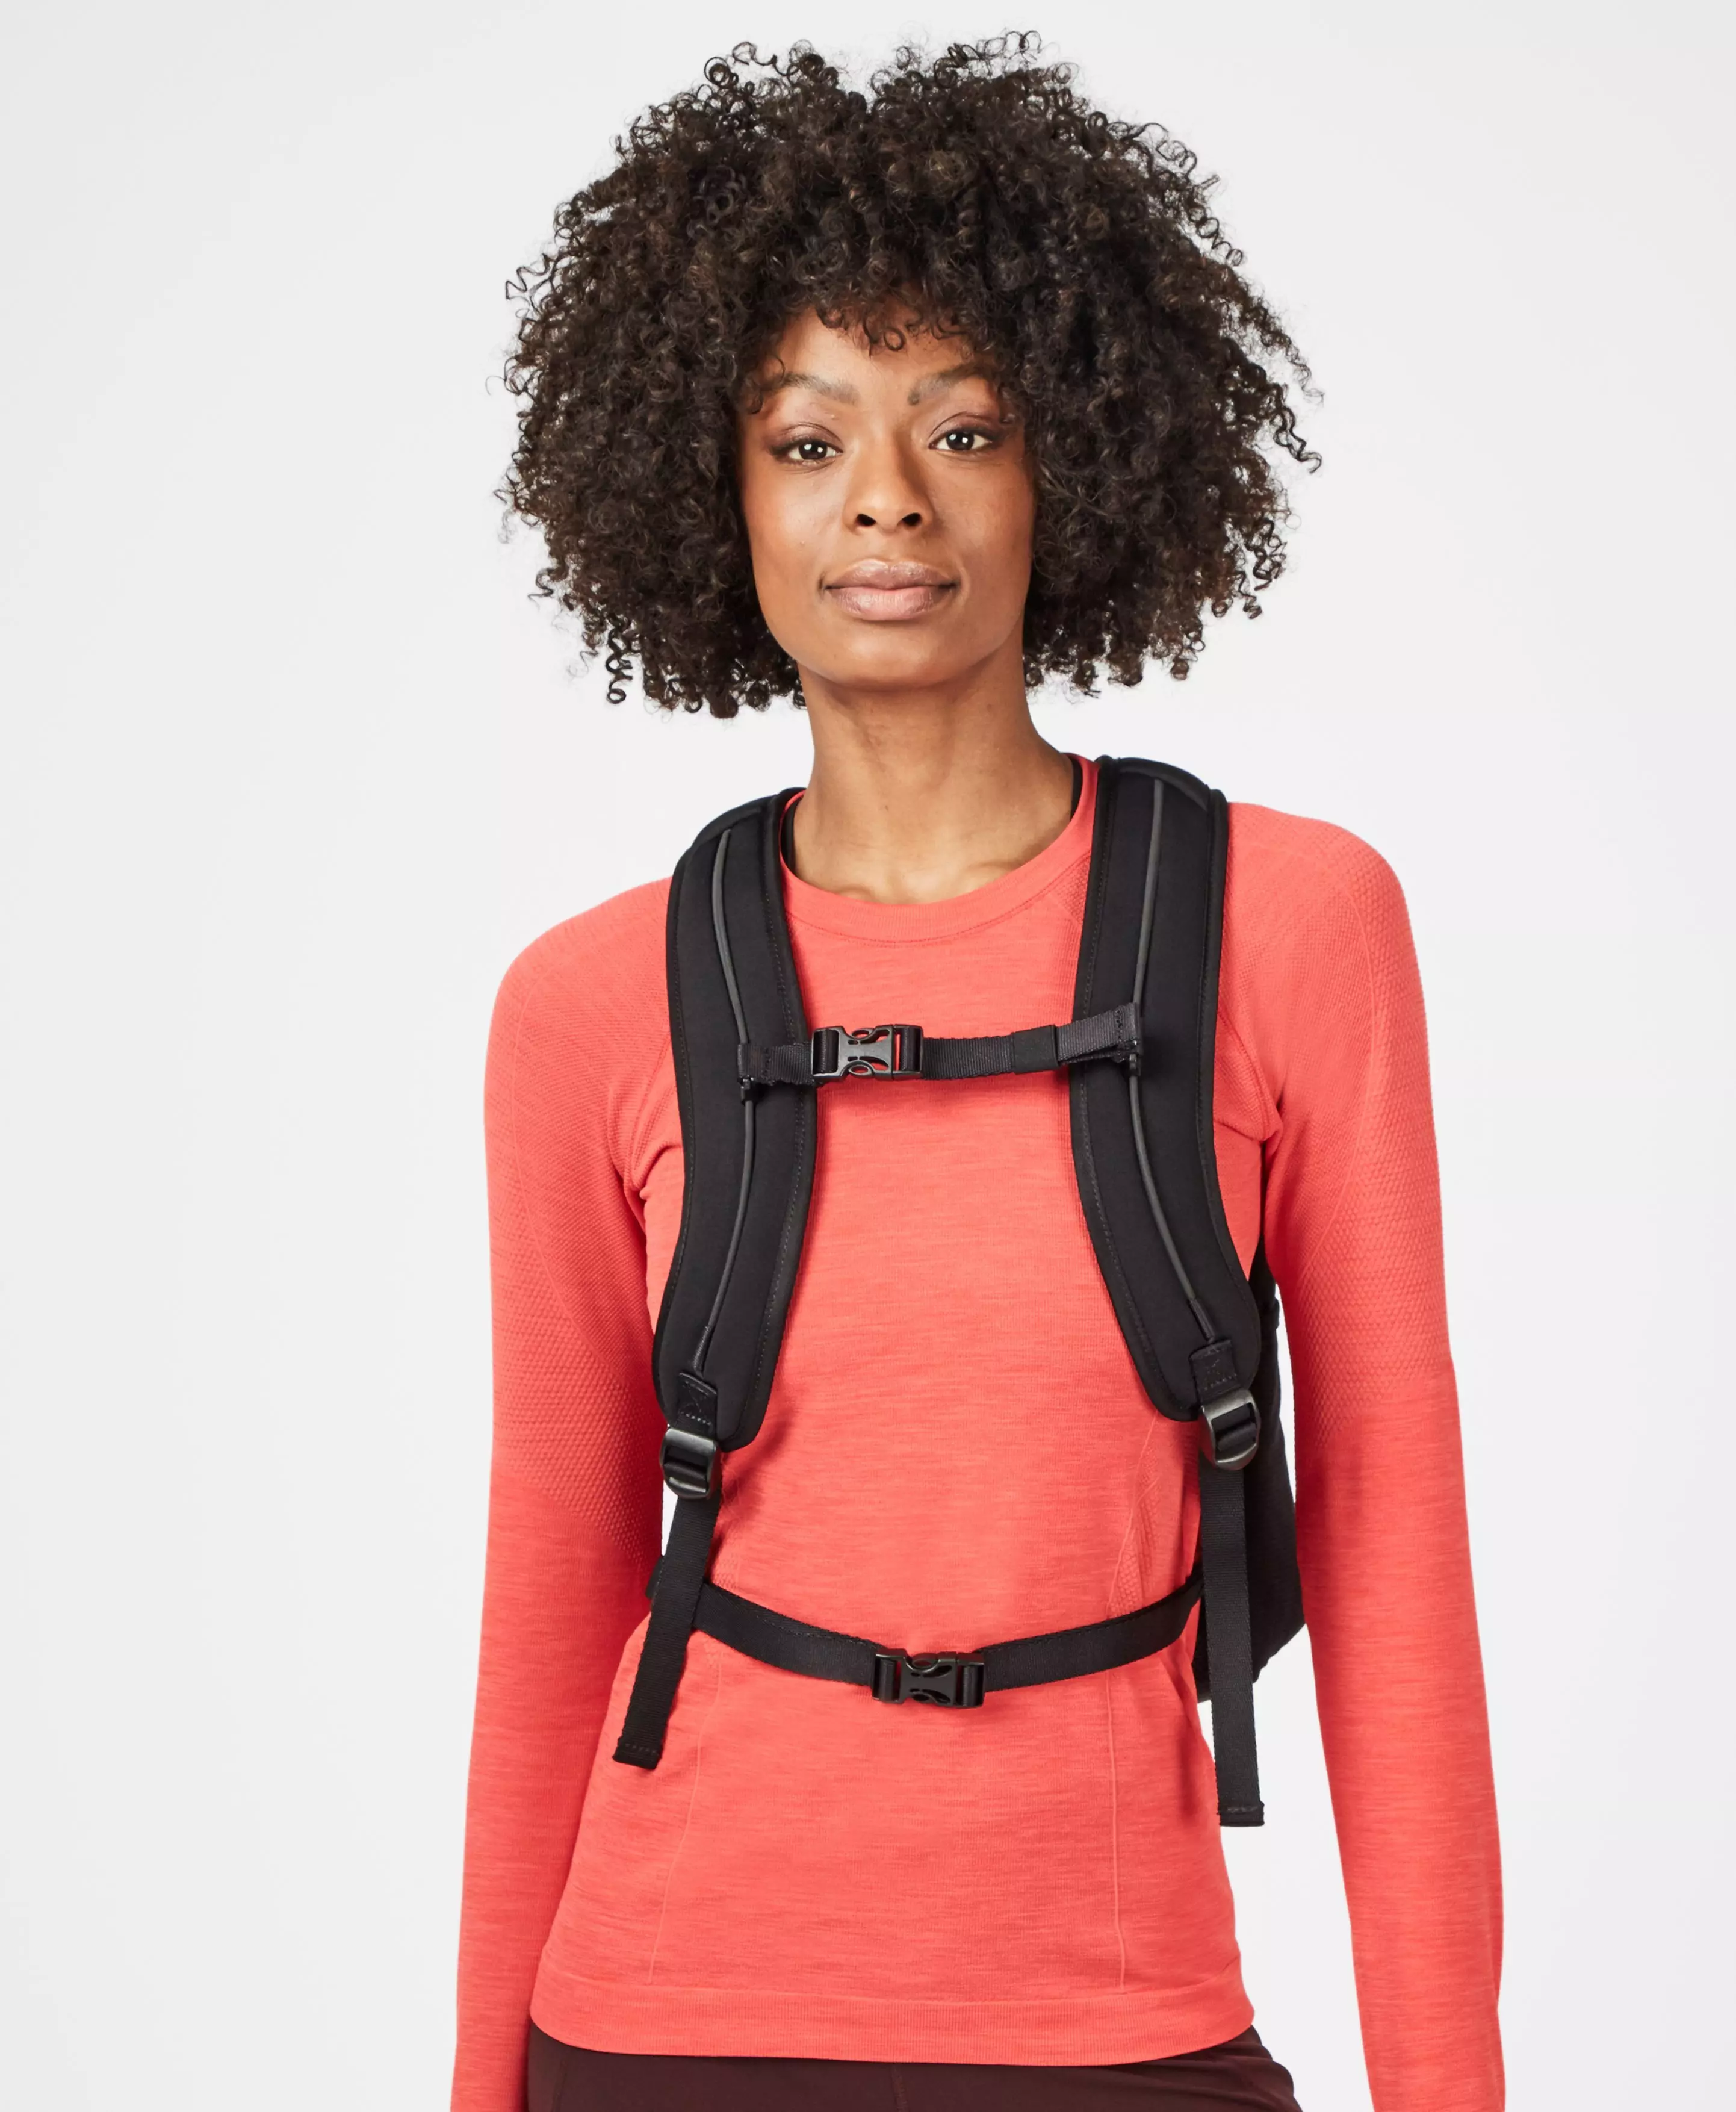 Sweaty Betty, Bags, Nwt Sweaty Betty Gray Multi Use Backpack Yoga Bag